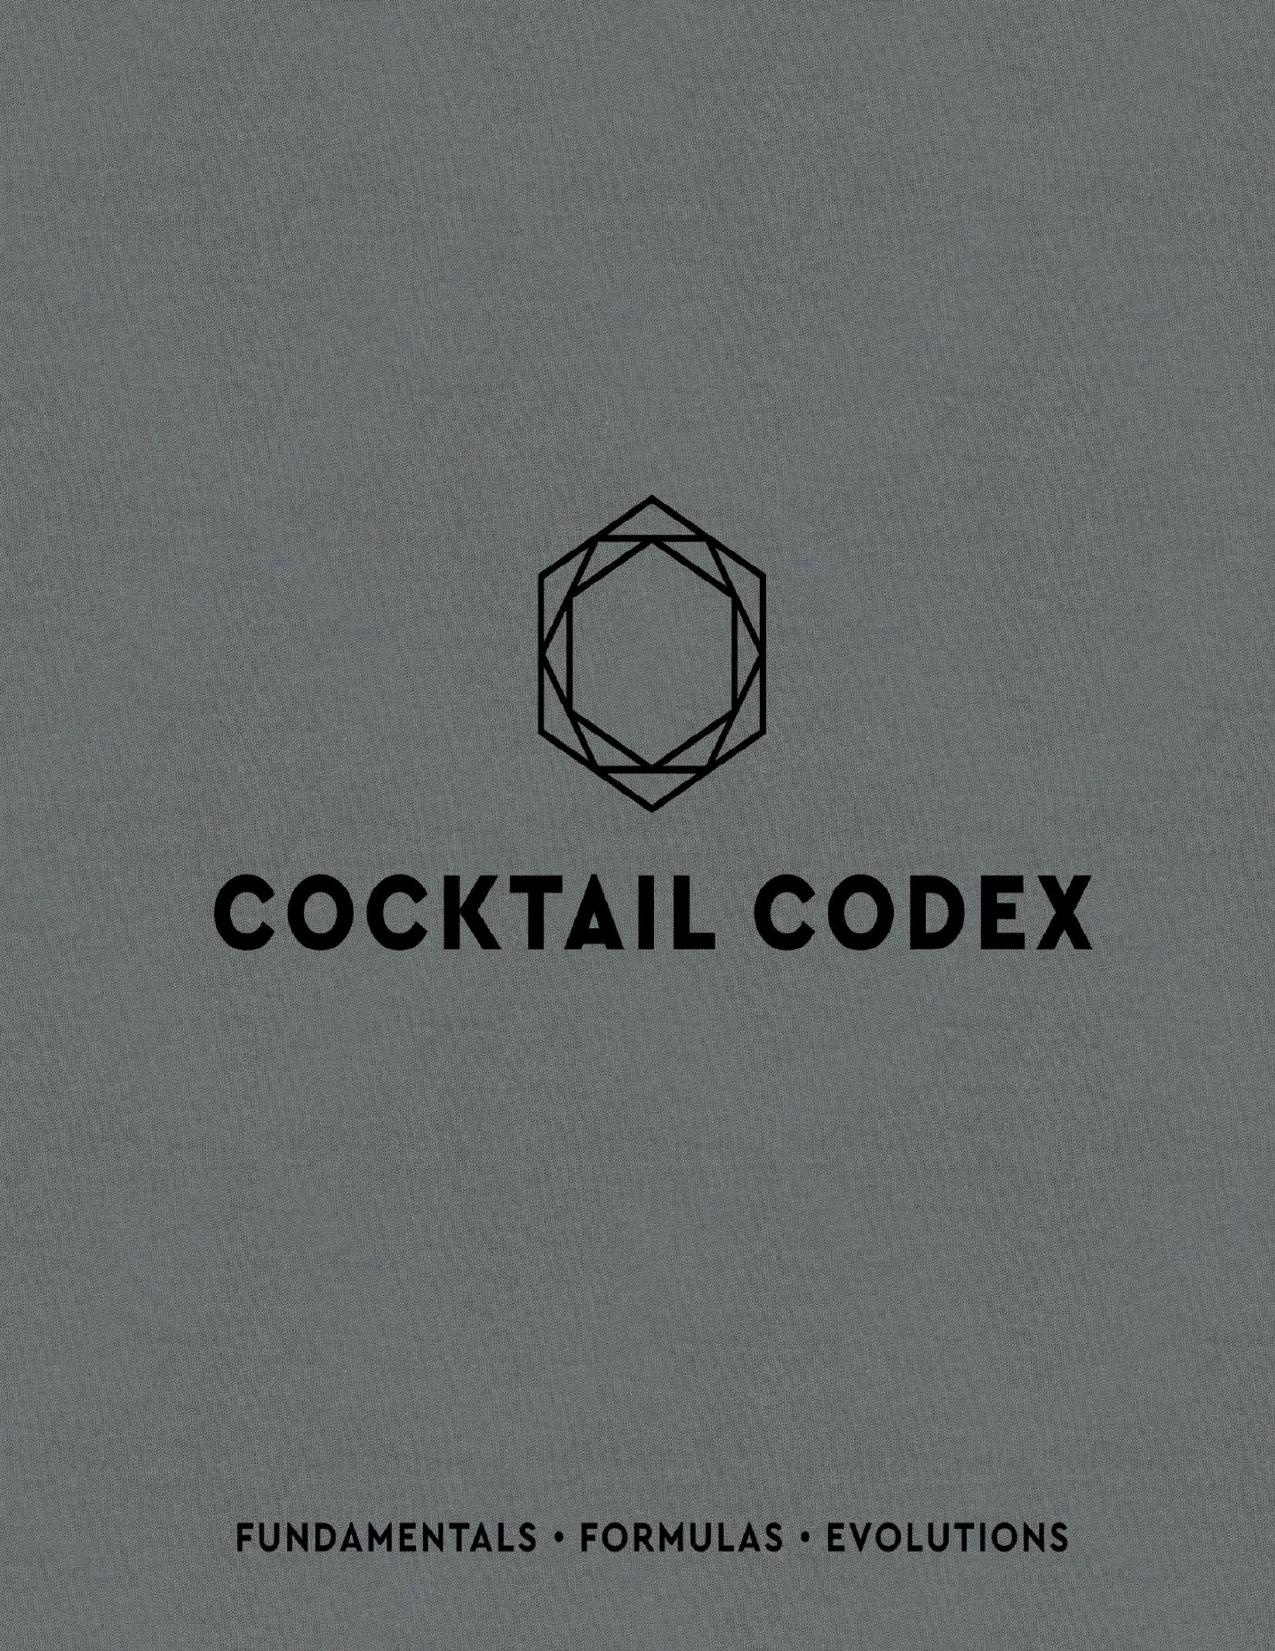 Cocktail Codex Fundamentals, Formulas, Evolutions - Alex Day & Nick Fauchald & David Kaplan.jpg